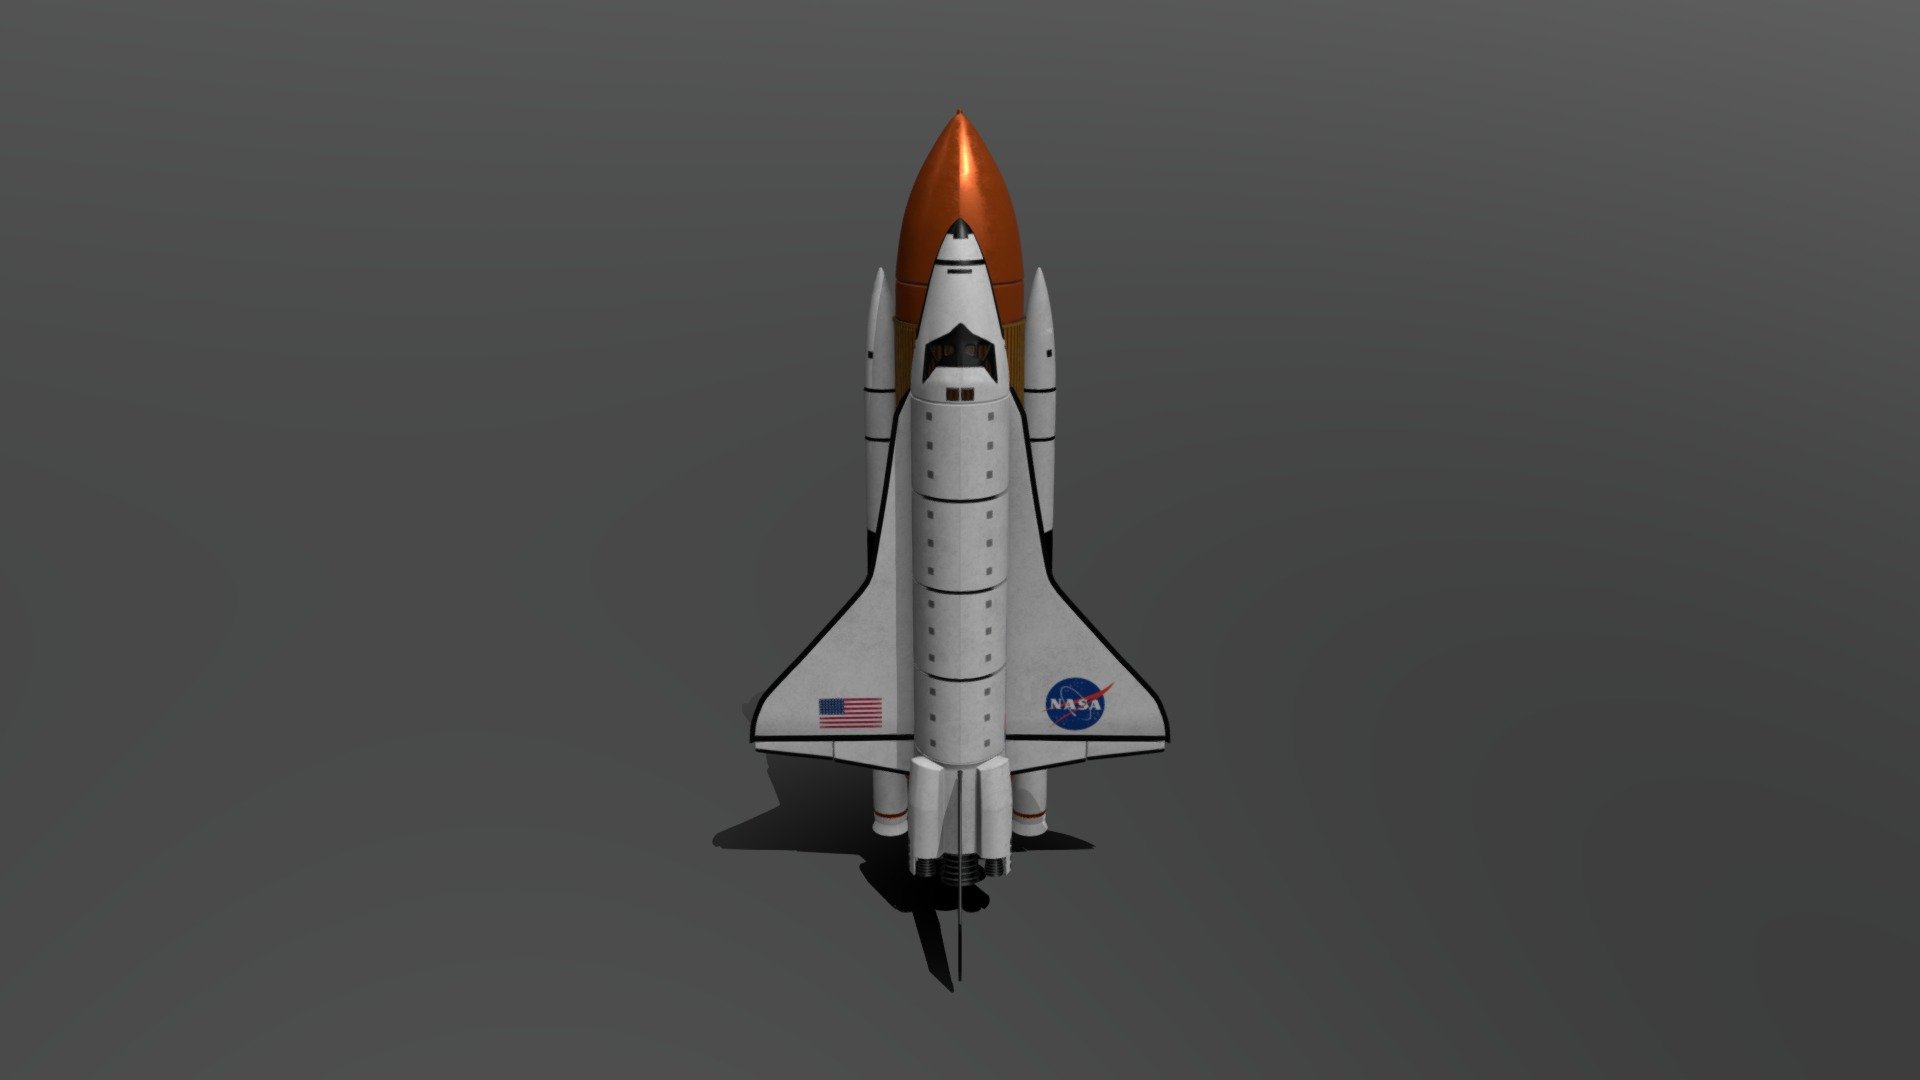 Nasa Space Shuttle
Texutre Size 2k - Space Shuttle - 3D model by metalheadqx 3d model